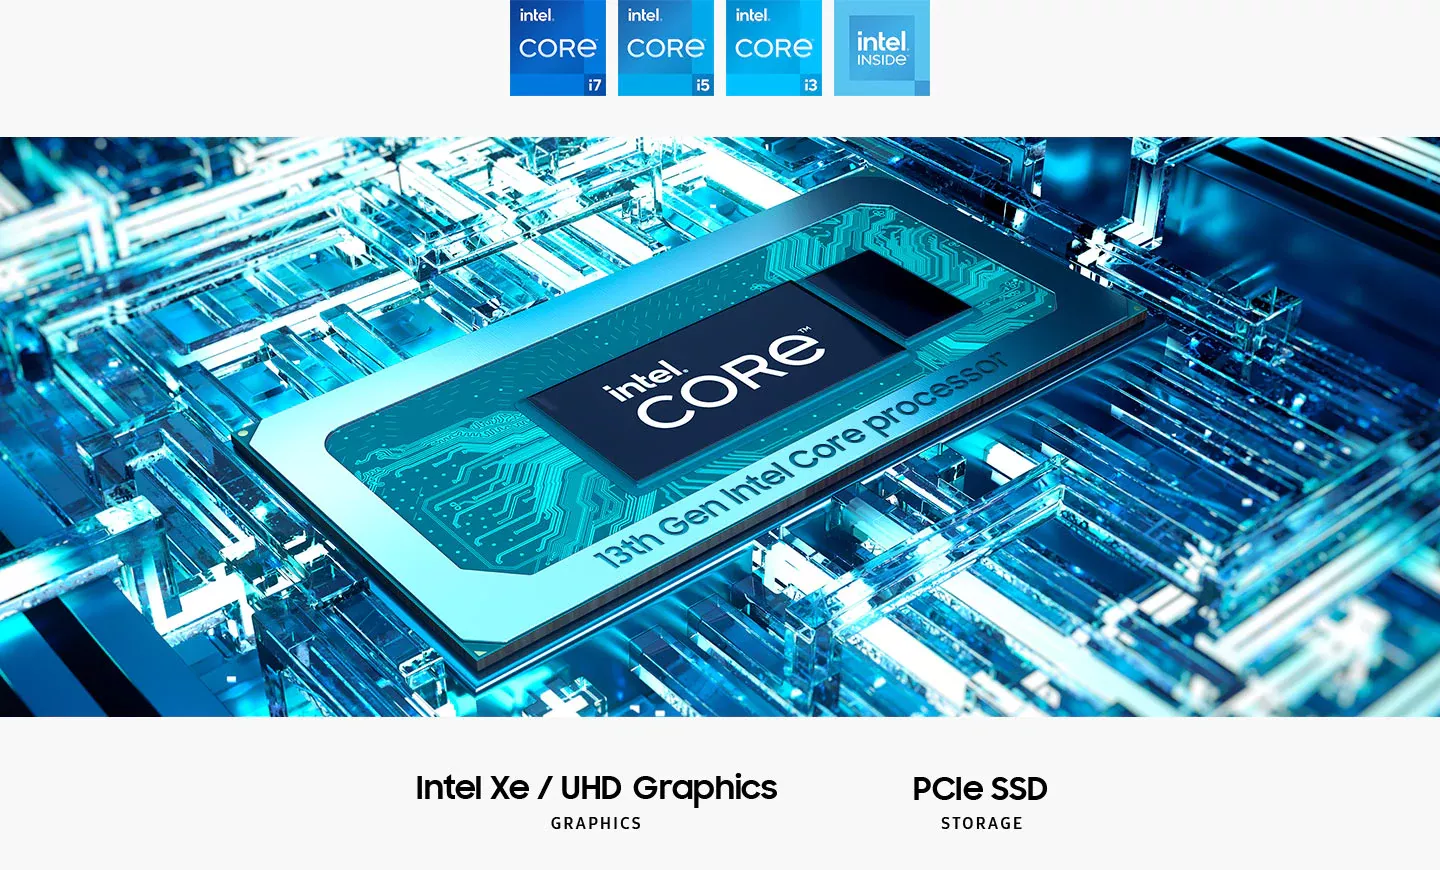 Samsung Galaxy Book3 | 15.6 IPS | Intel i5 | 16GB DDR4 | 256GB SSD | Graphite